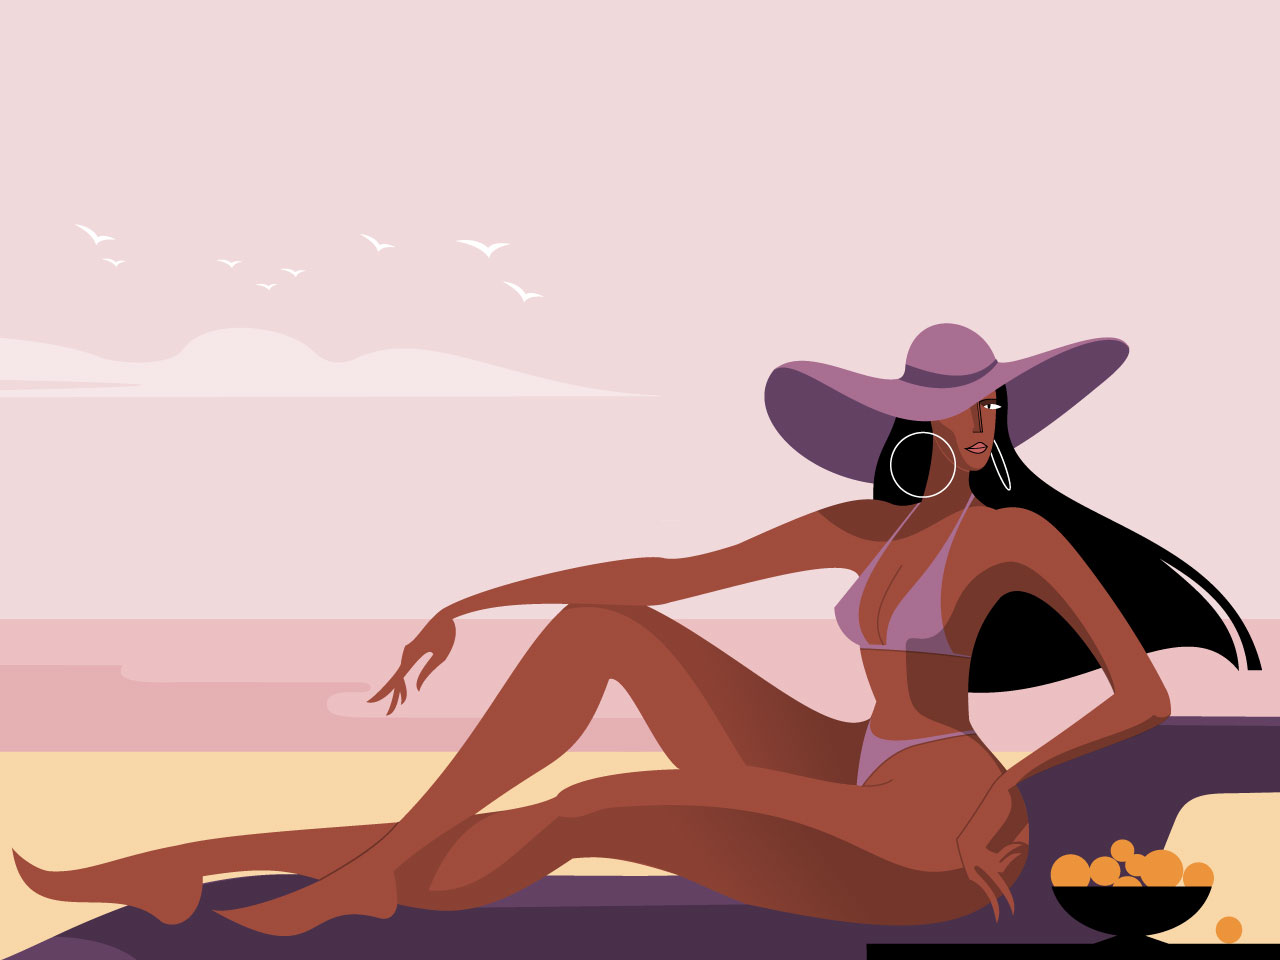 Longlegged brunette girl widebrimmed hat bikini with fruits basket sun sea yachts beach